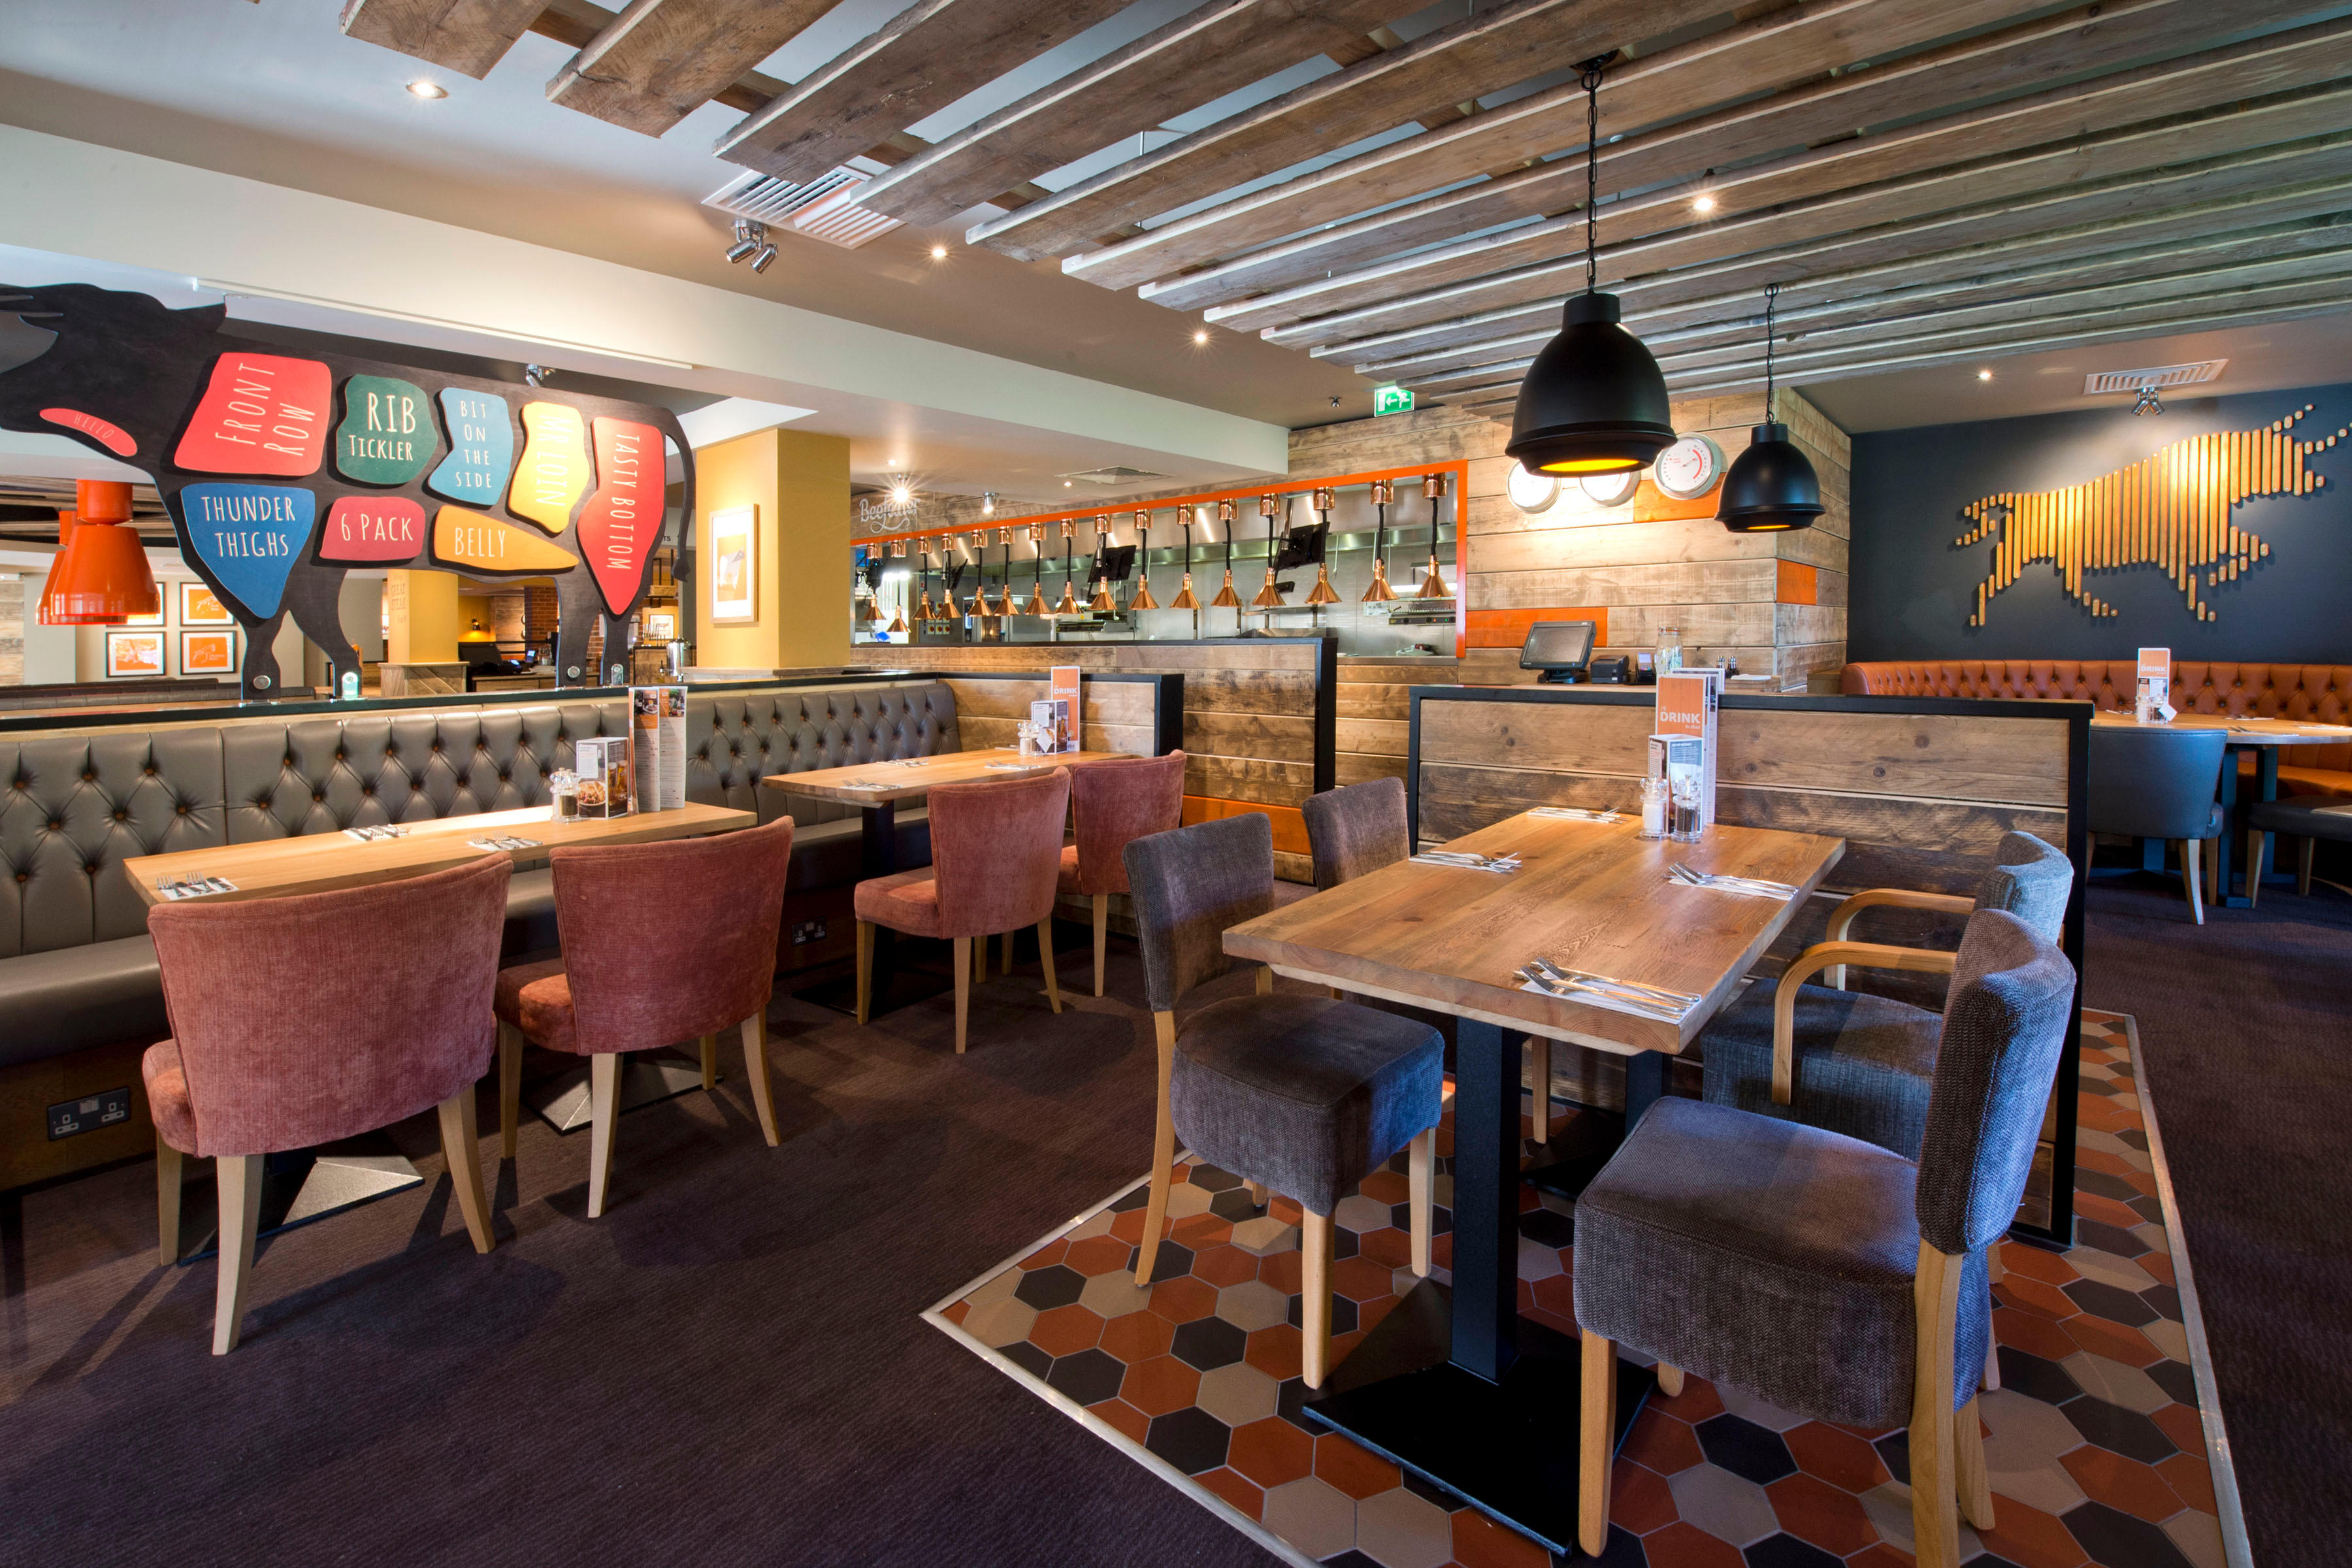 Cirencester Beefeater restaurant interior Cirencester Beefeater Cirencester 01285 708047